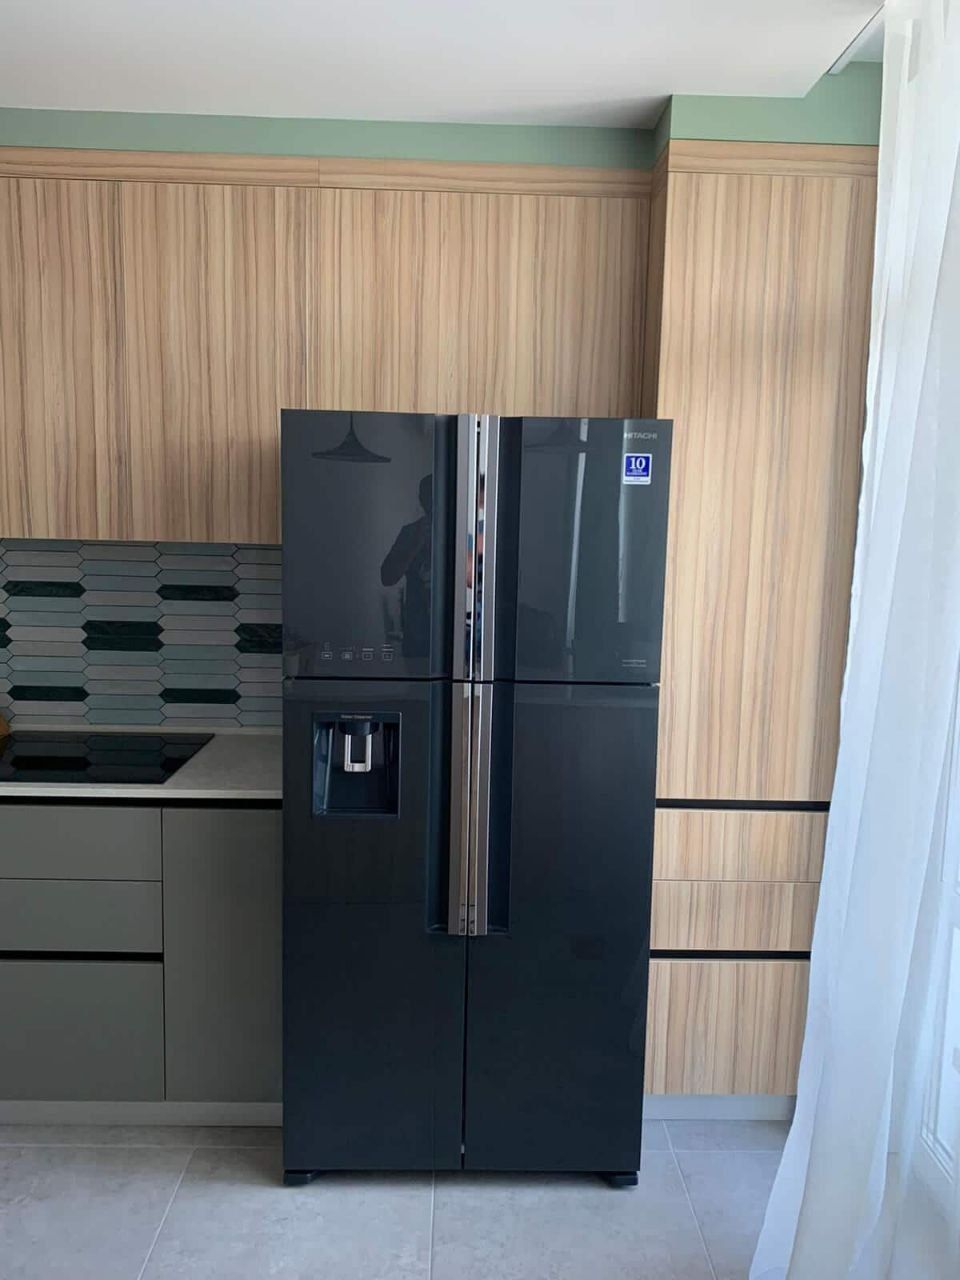 Холодильник HITACHI модель: RWG660 PUC7 GGR